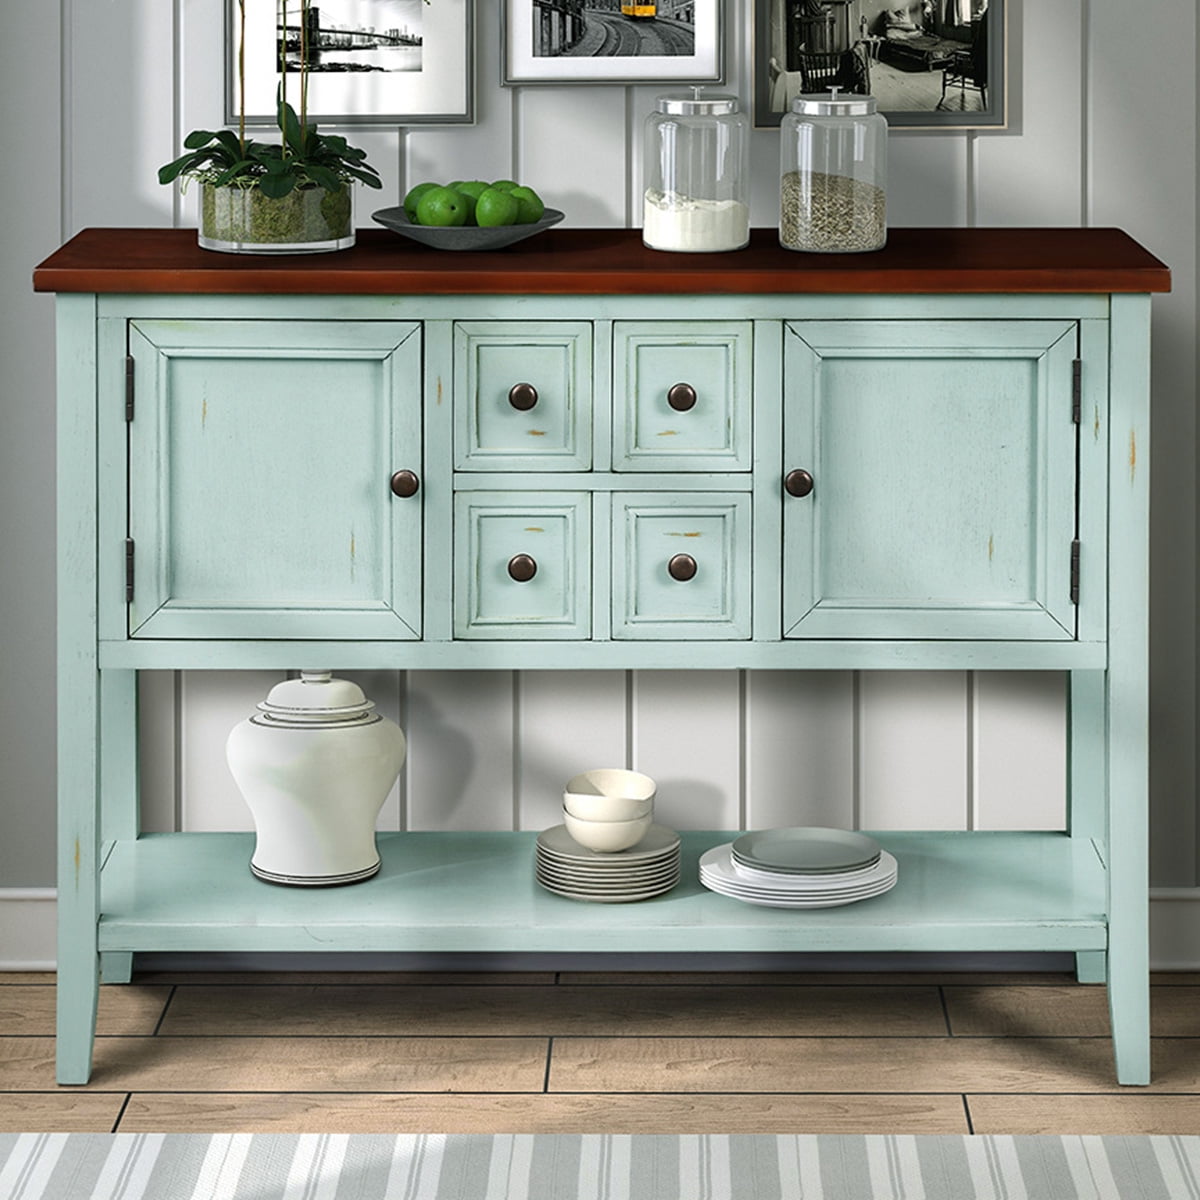 Details about   Kitchen Storage Pantry Cabinet Cupboard Food Organizer Wood Furniture Tall Shelf 